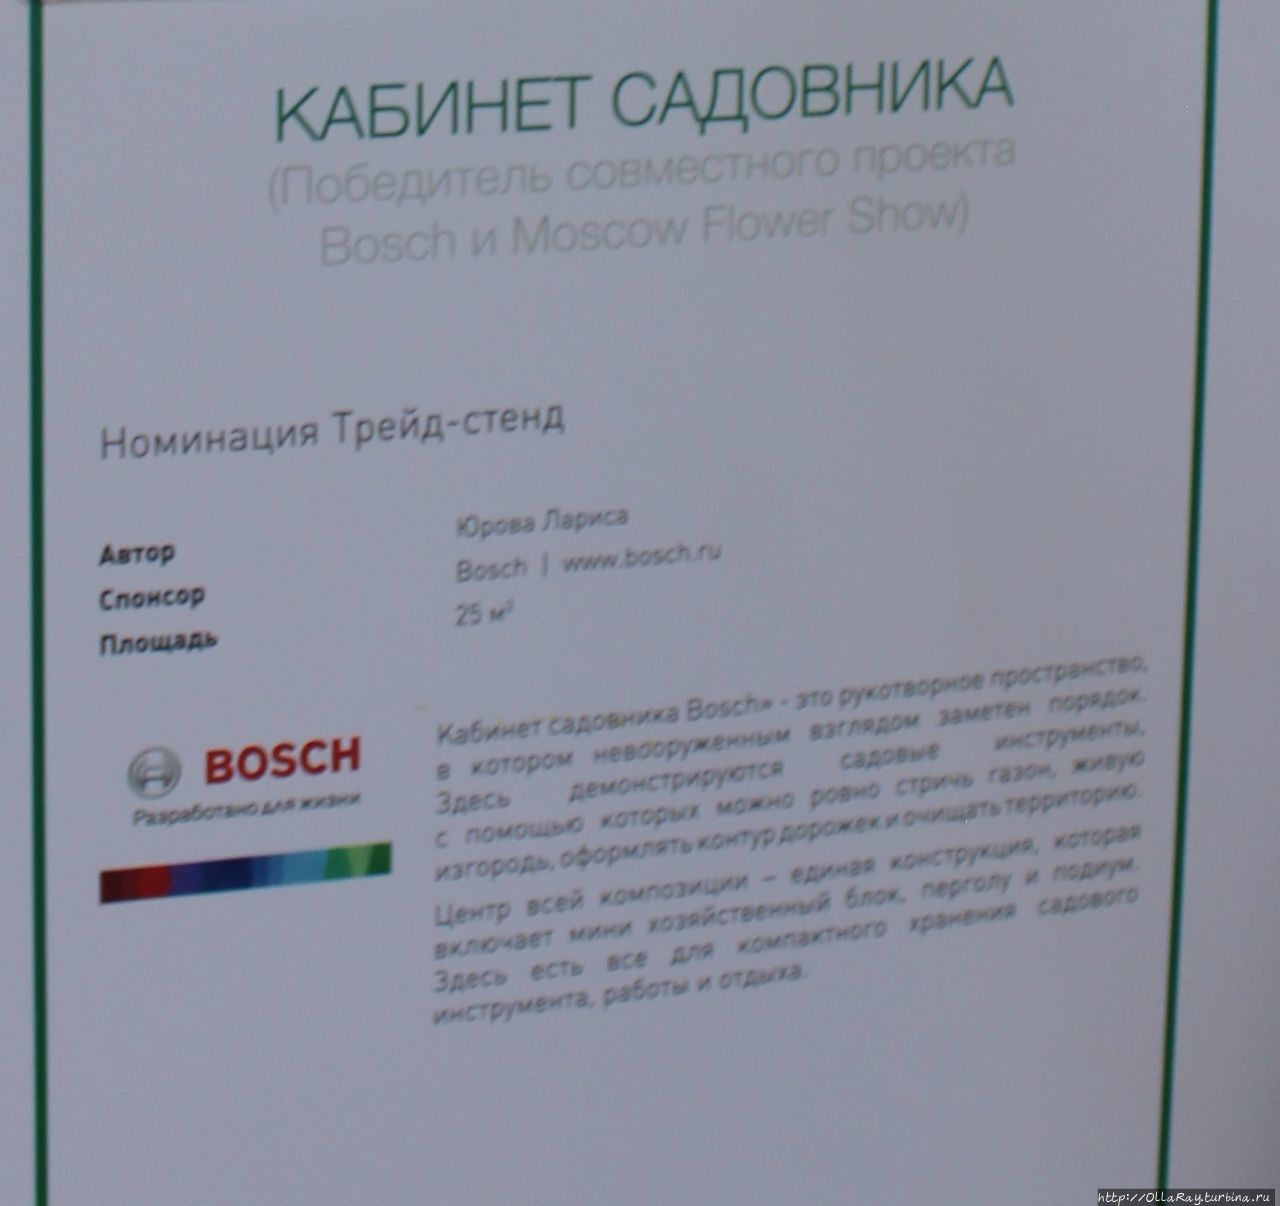 Moscow Flower Show 2017. Фотоотчёт и впечатления. Москва, Россия